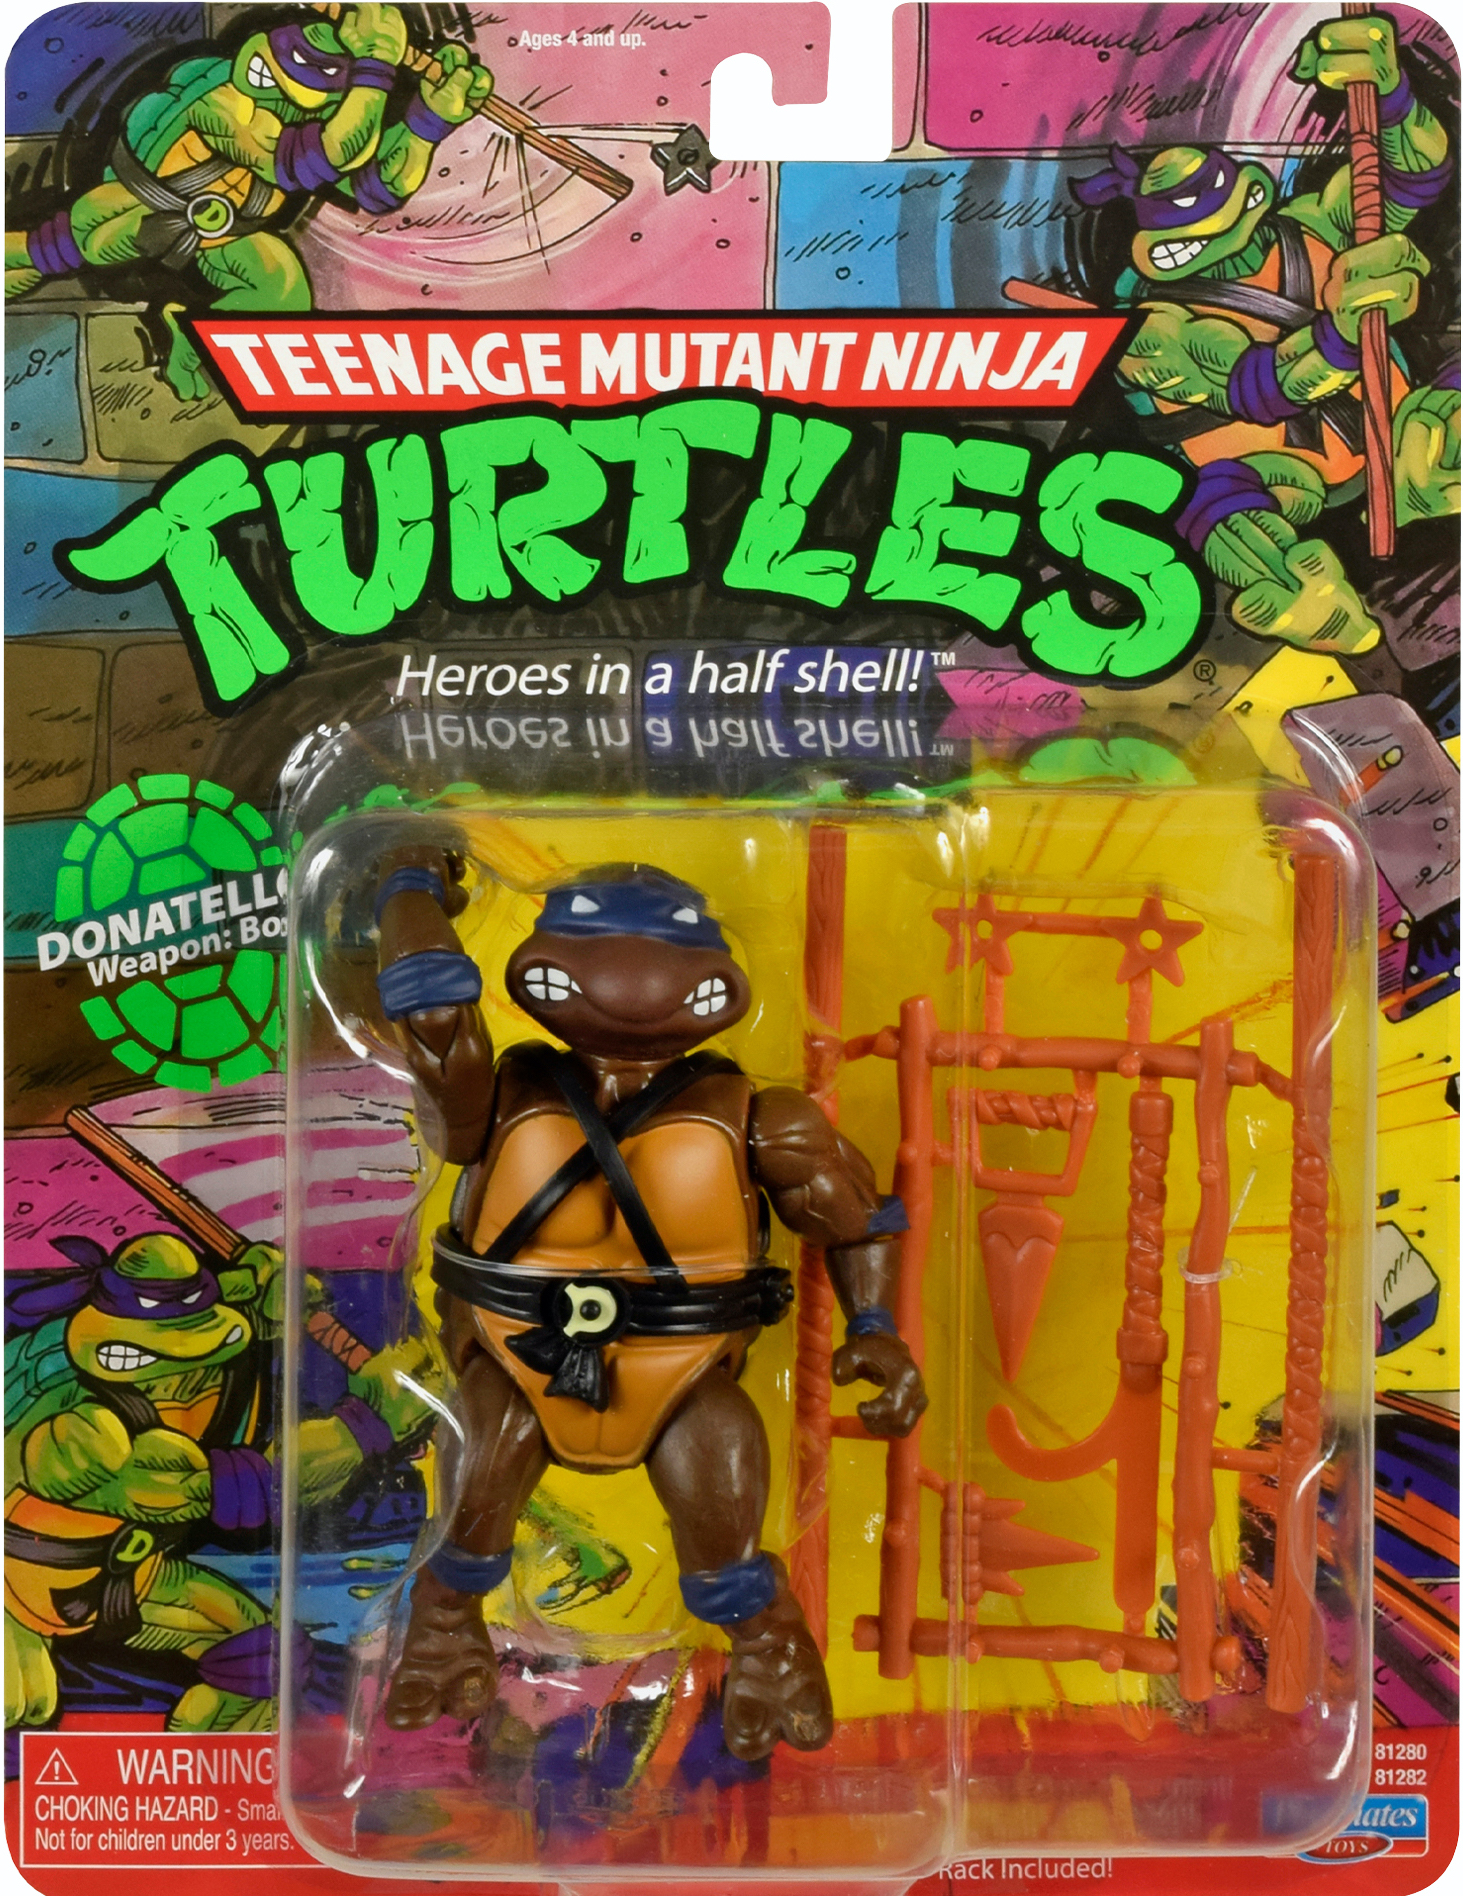 https://www.actionfigure411.com/teenage-mutant-ninja-turtles/images/donatello-classic-basic-2889.jpg